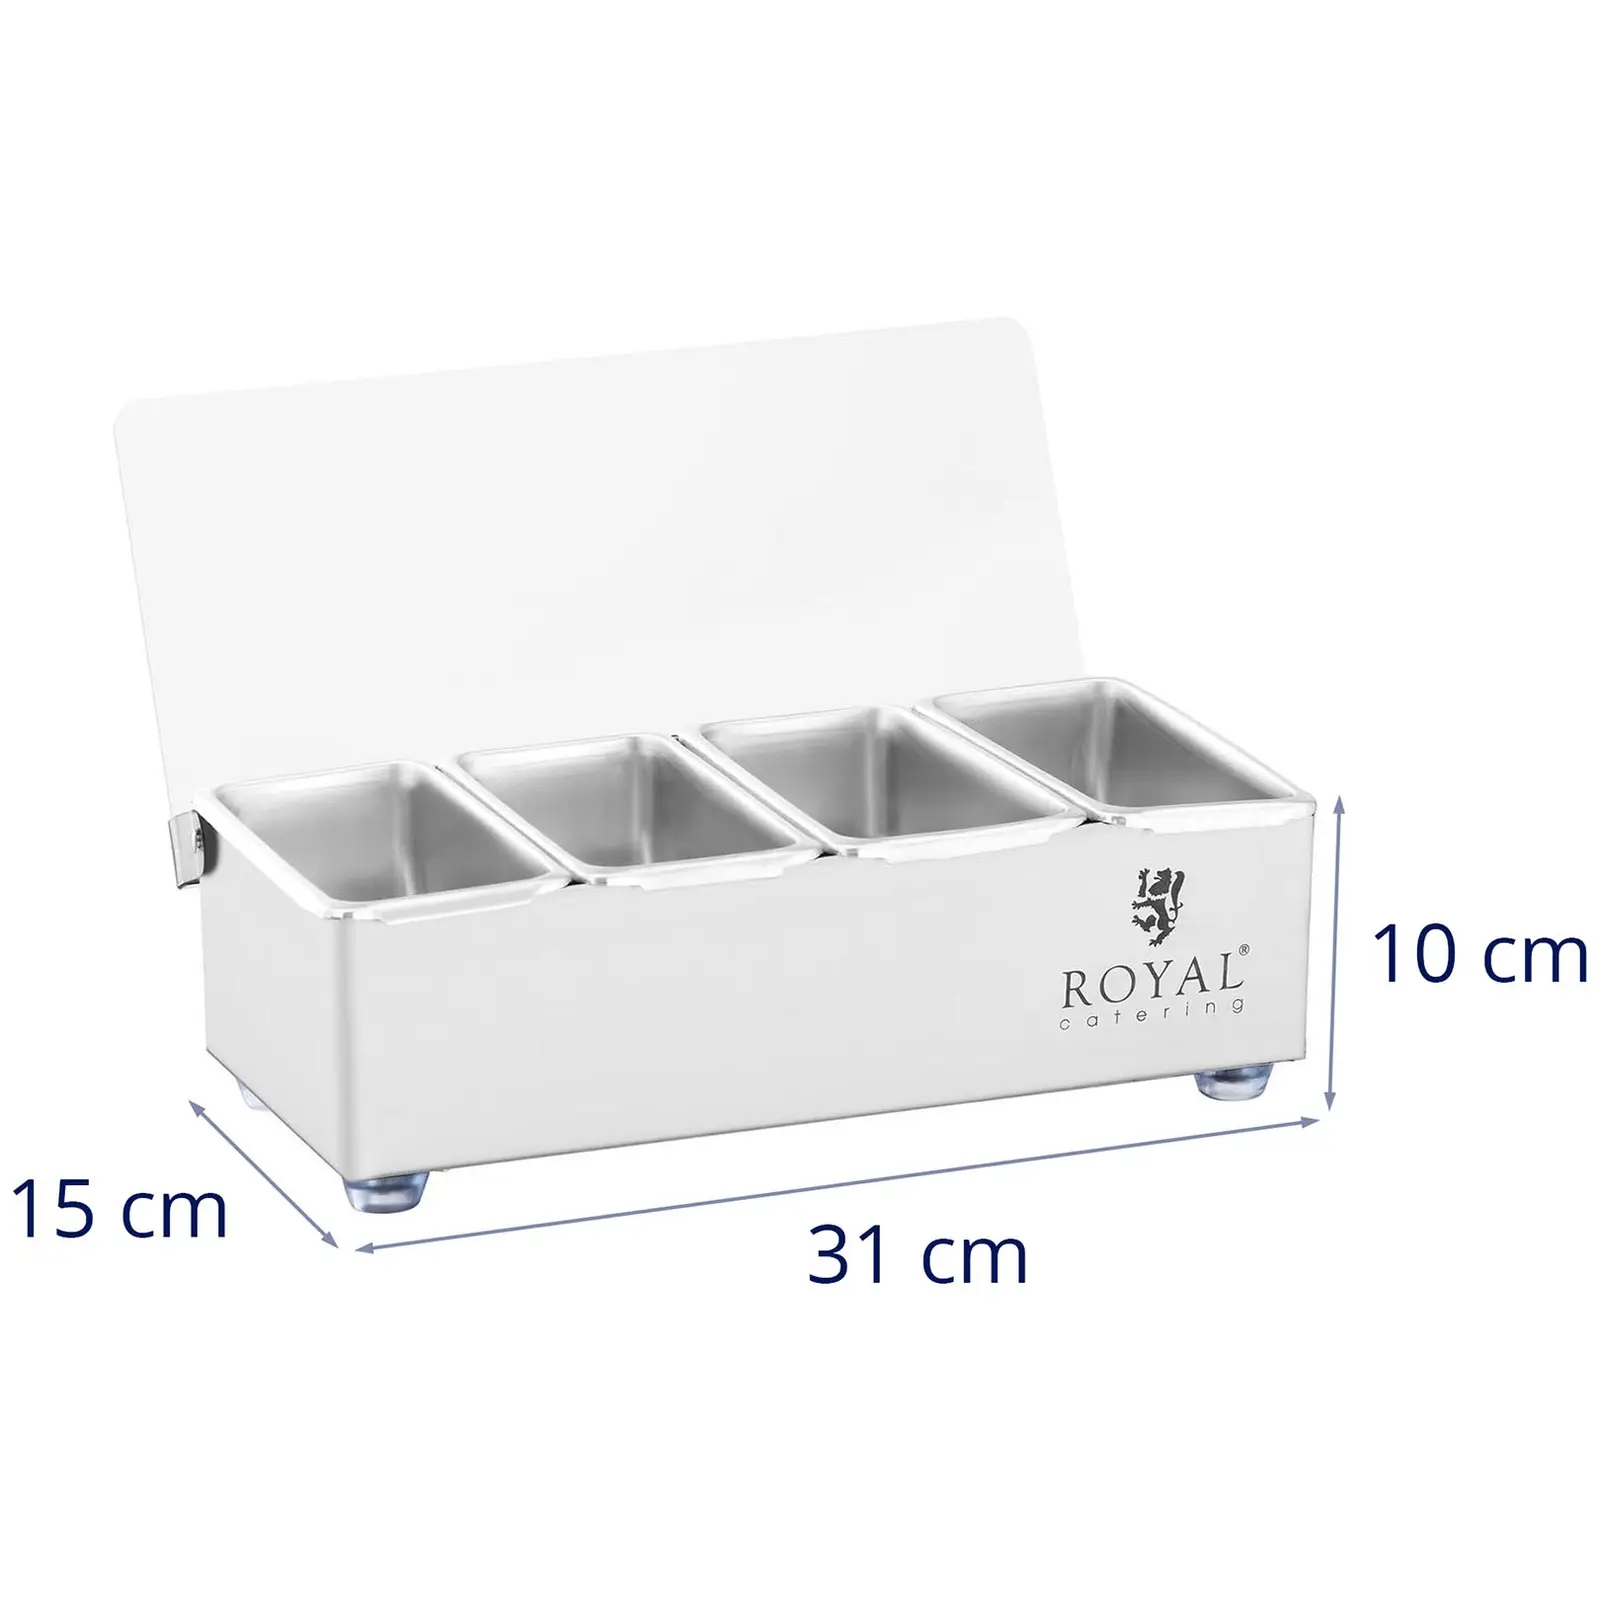 Zutatenbehälter - Edelstahl - 4 x 0,4 L - Royal Catering